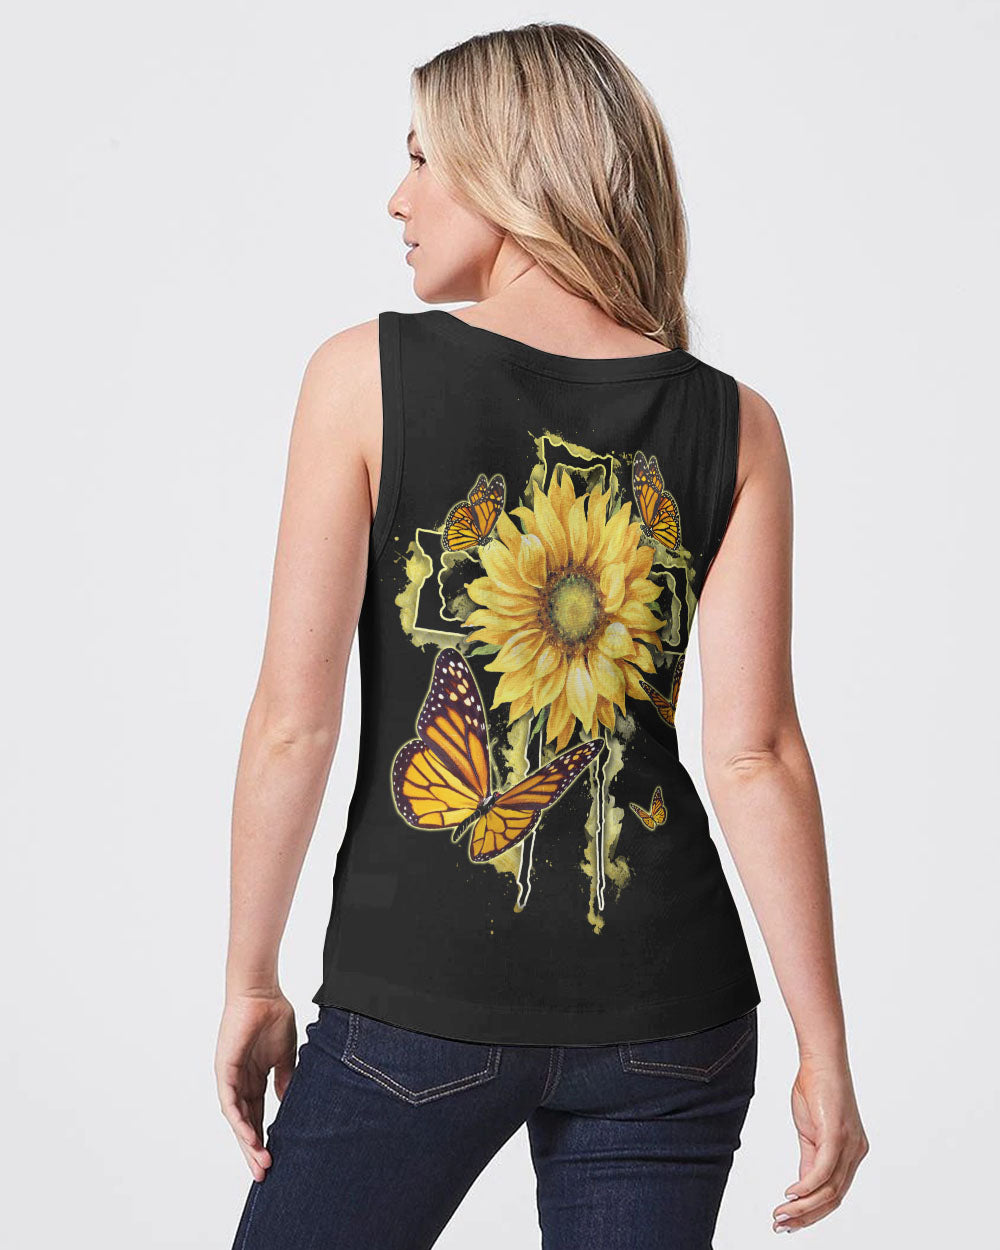 Sunflower Butterfly Women's Christian Tanks